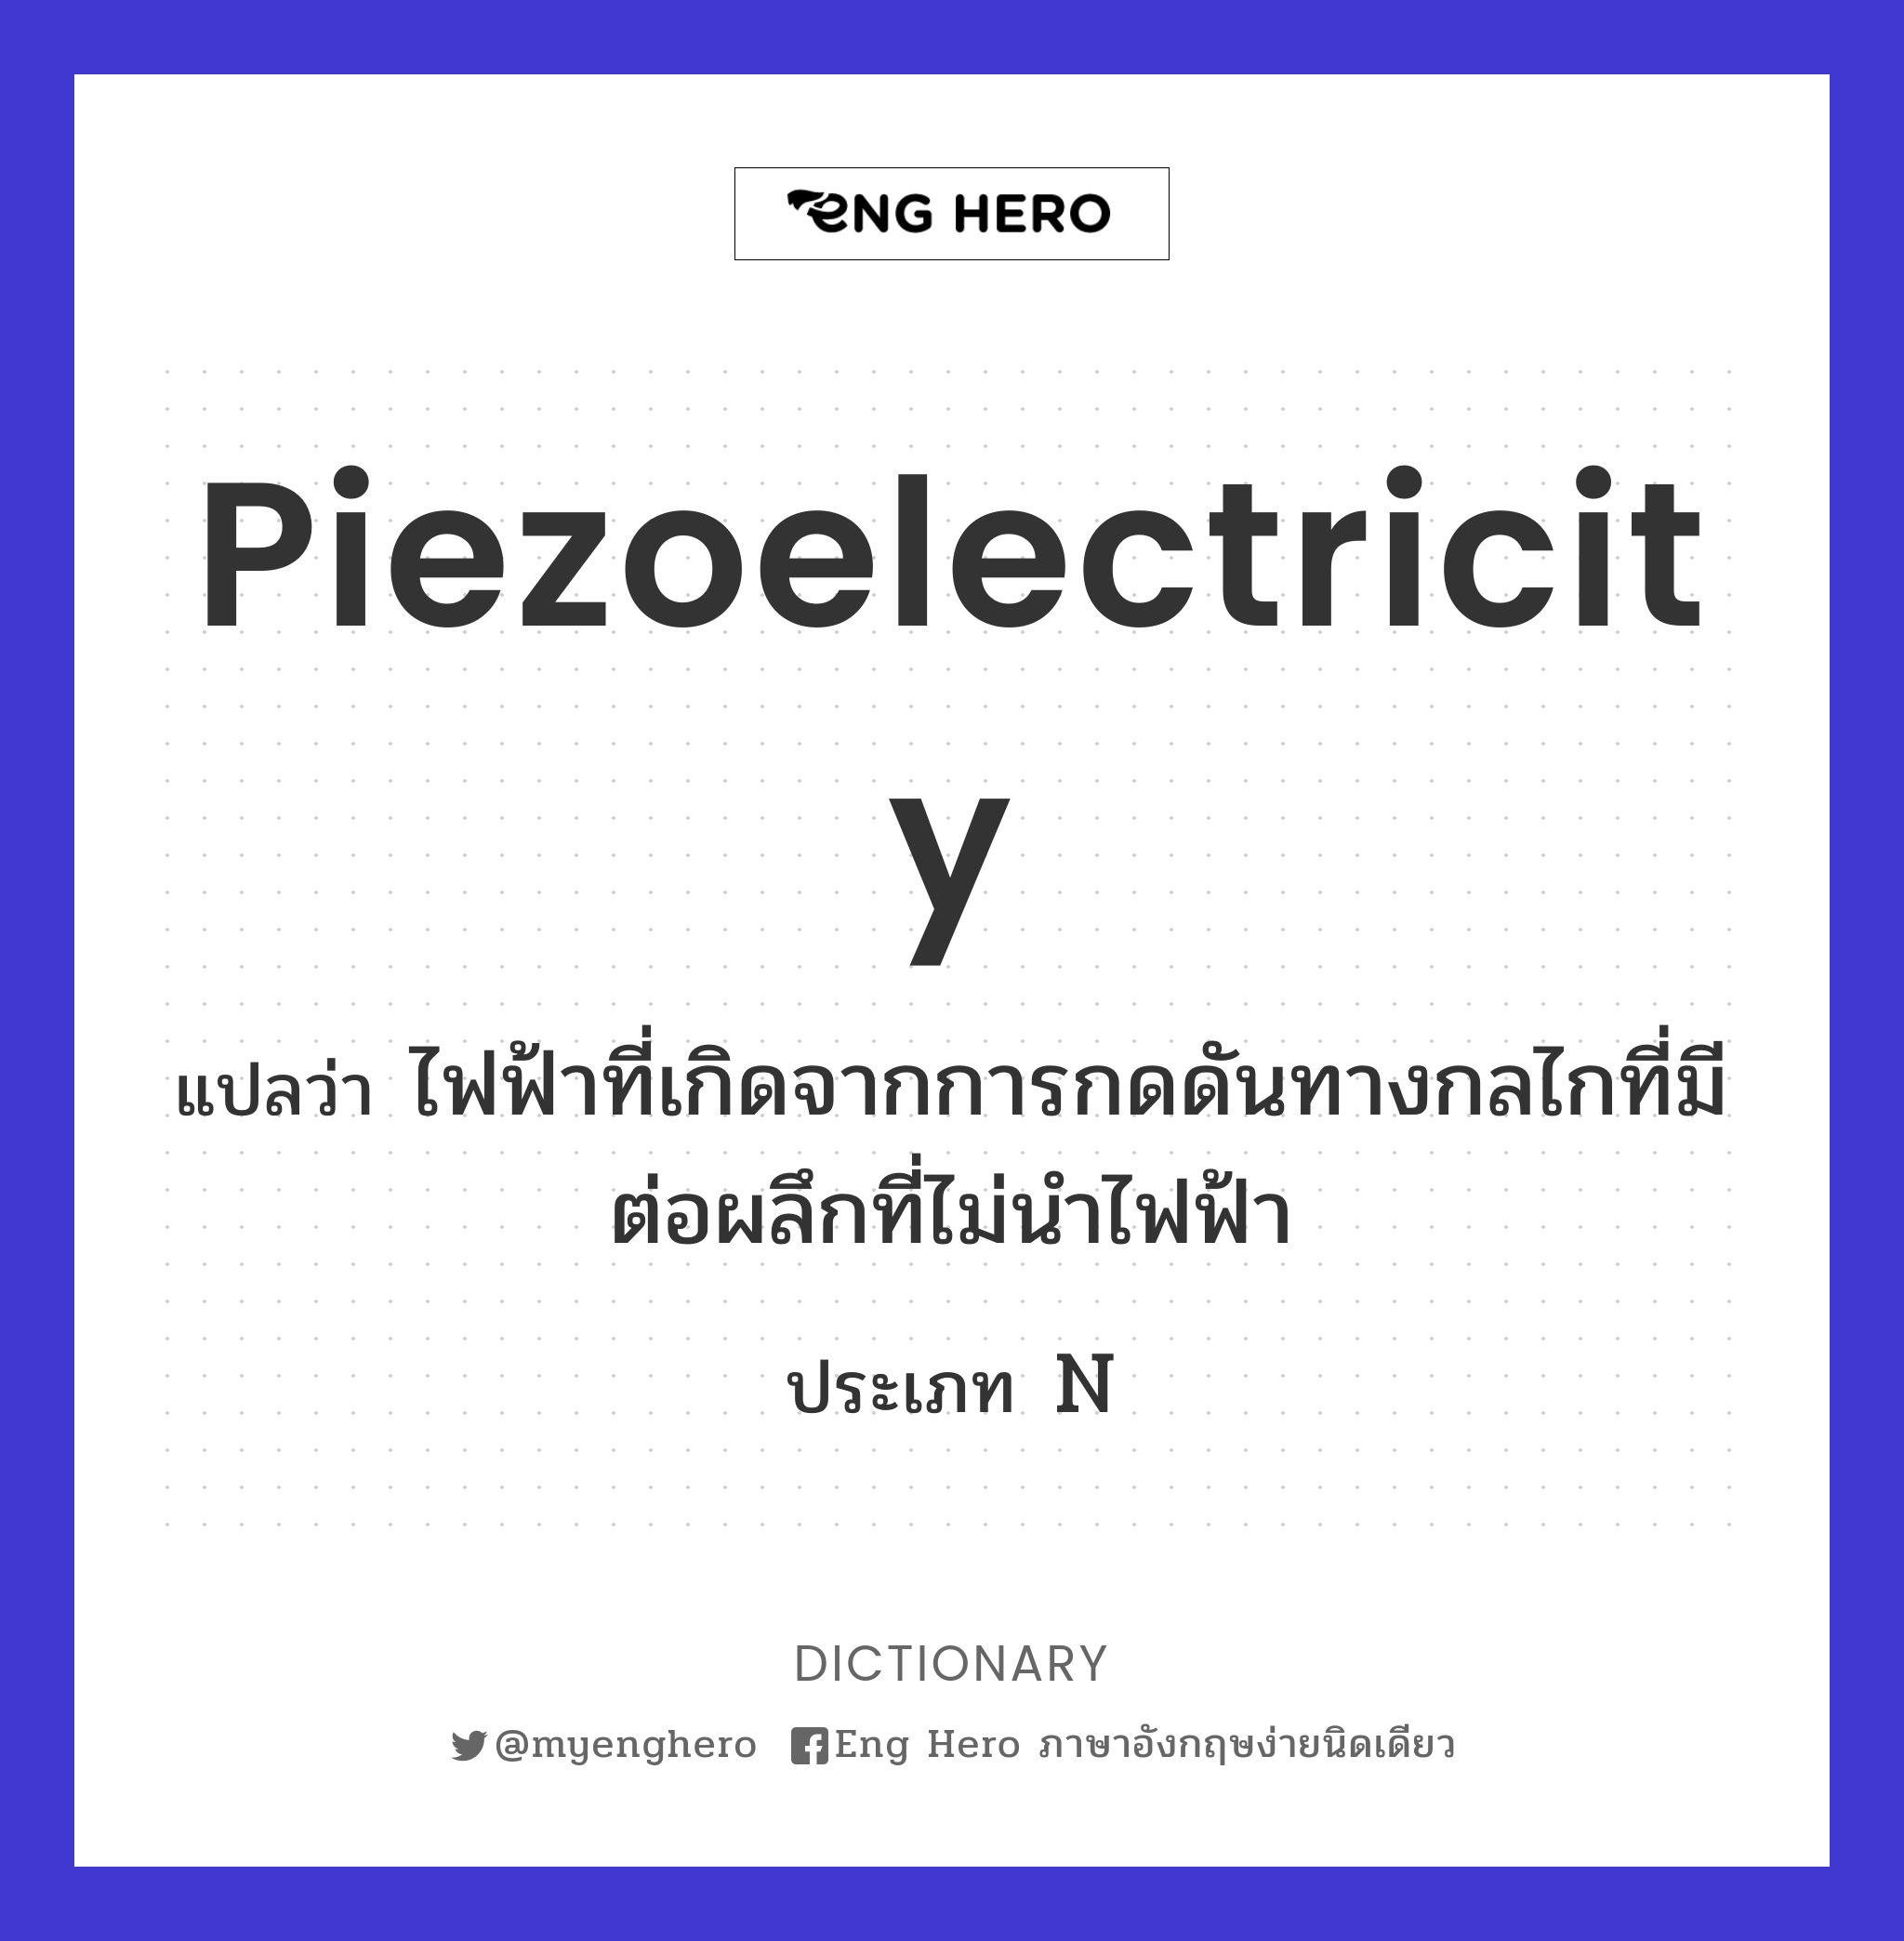 piezoelectricity